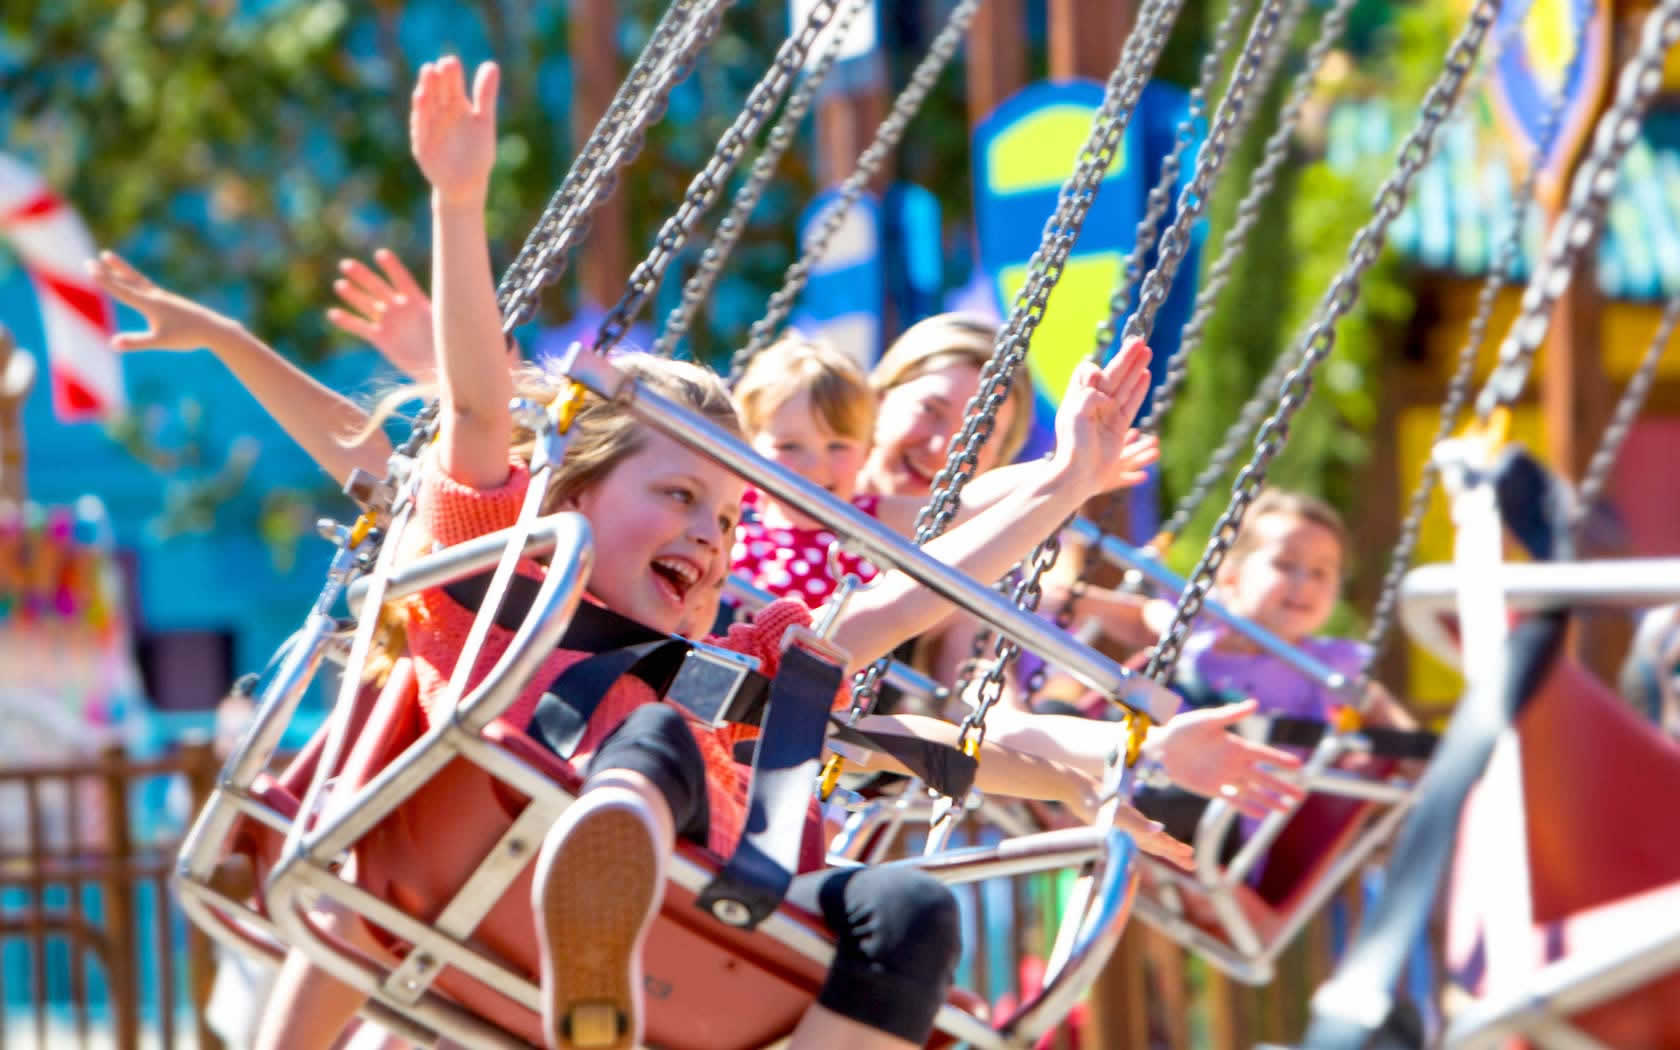 Take the Kids on a Gold Coast Theme Park Holiday